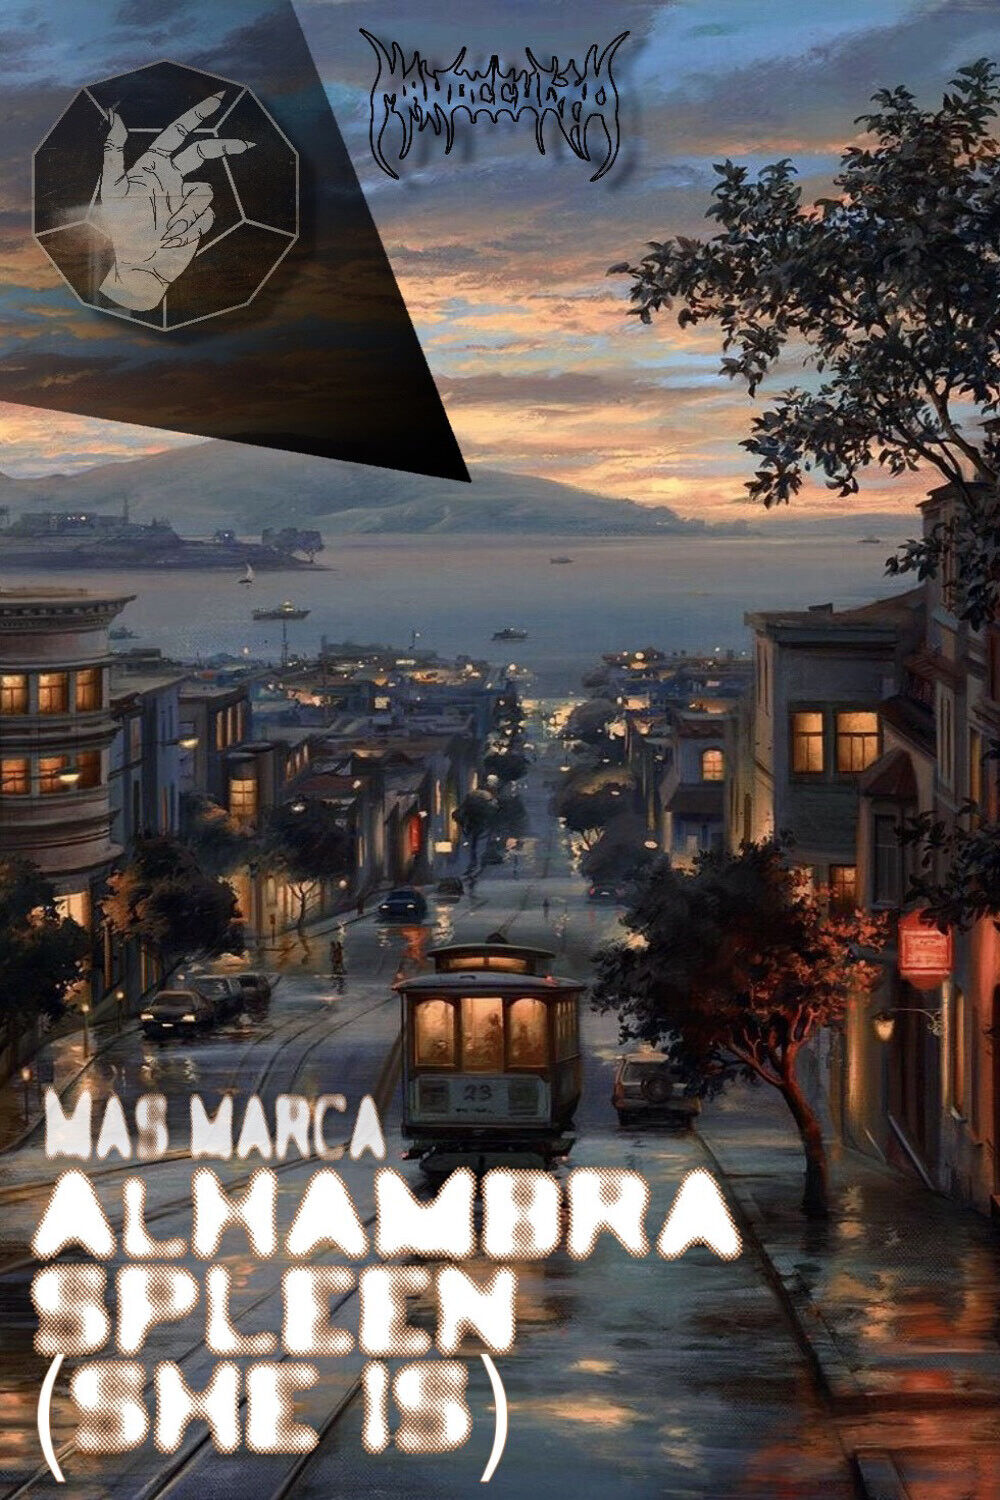 Alhambra spleen (she is) di Mas Marca,  2021,  Youcanprint